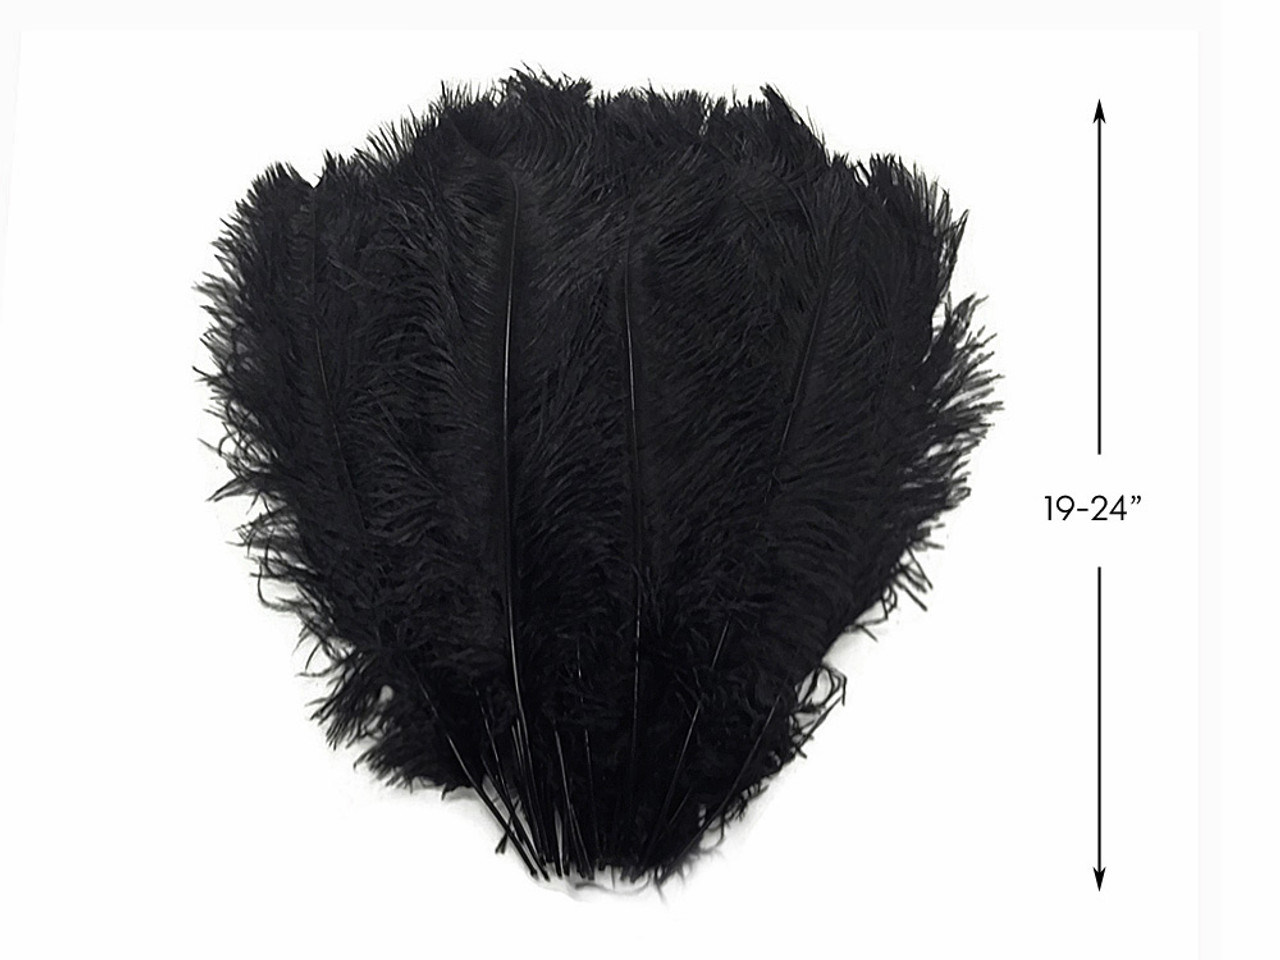  CROWN GUIDE Black Ostrich Feathers Bulk - 10 Pieces